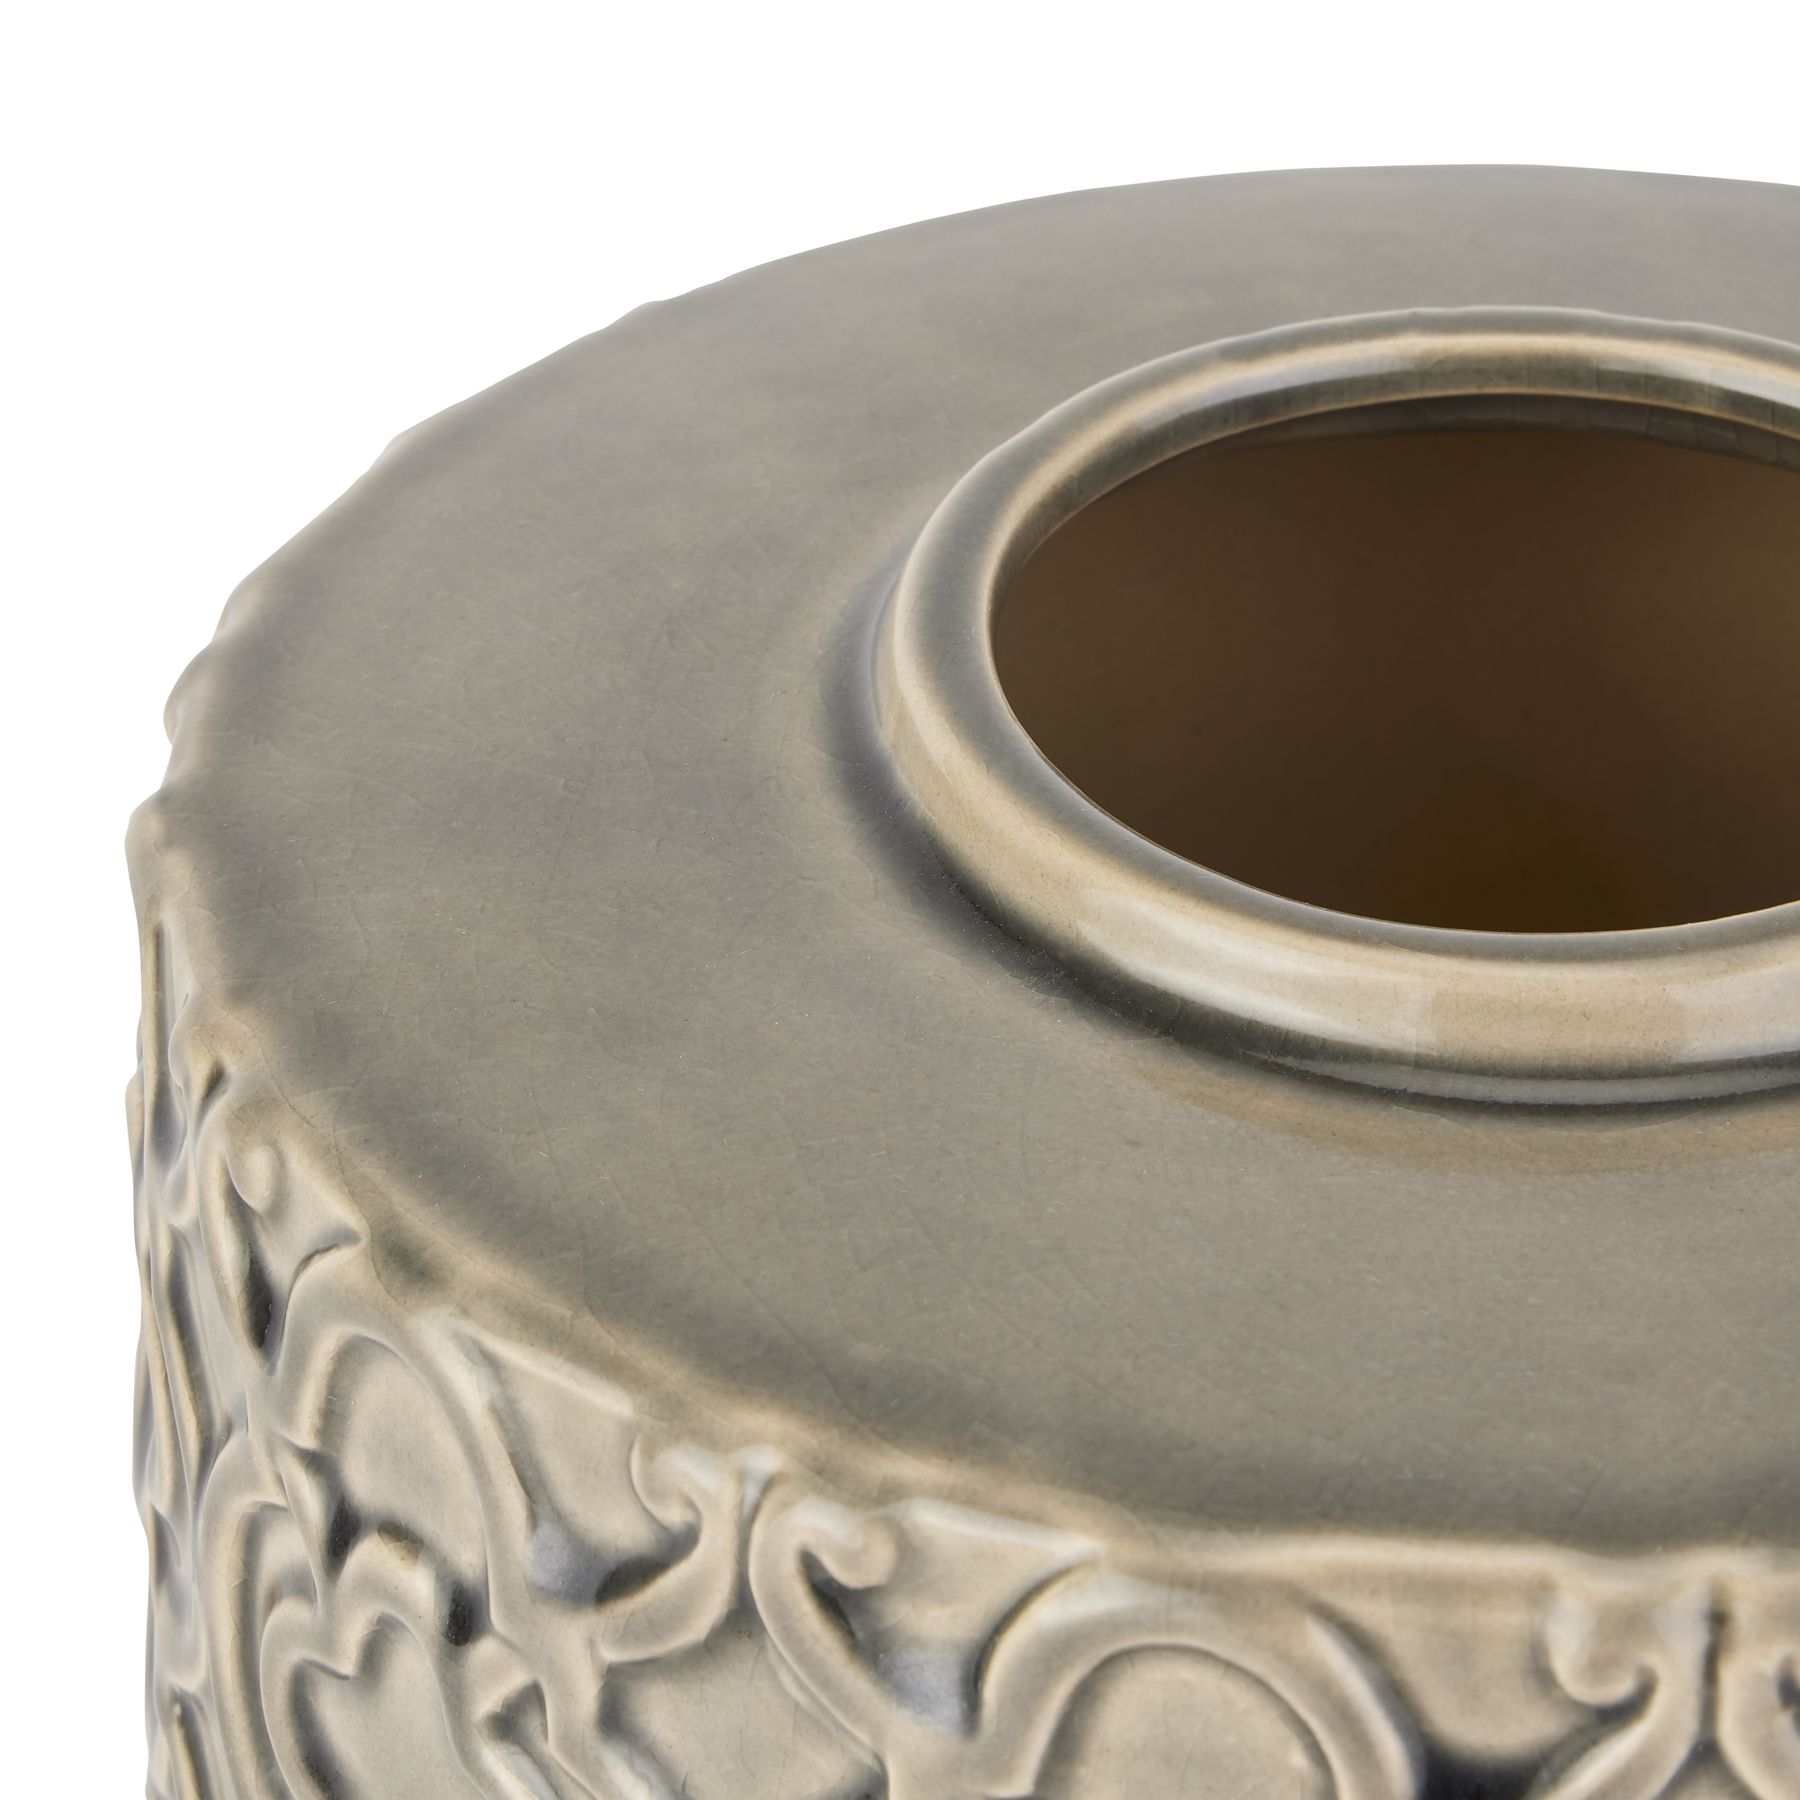 Seville Collection Grey Marrakesh Urn - Image 3